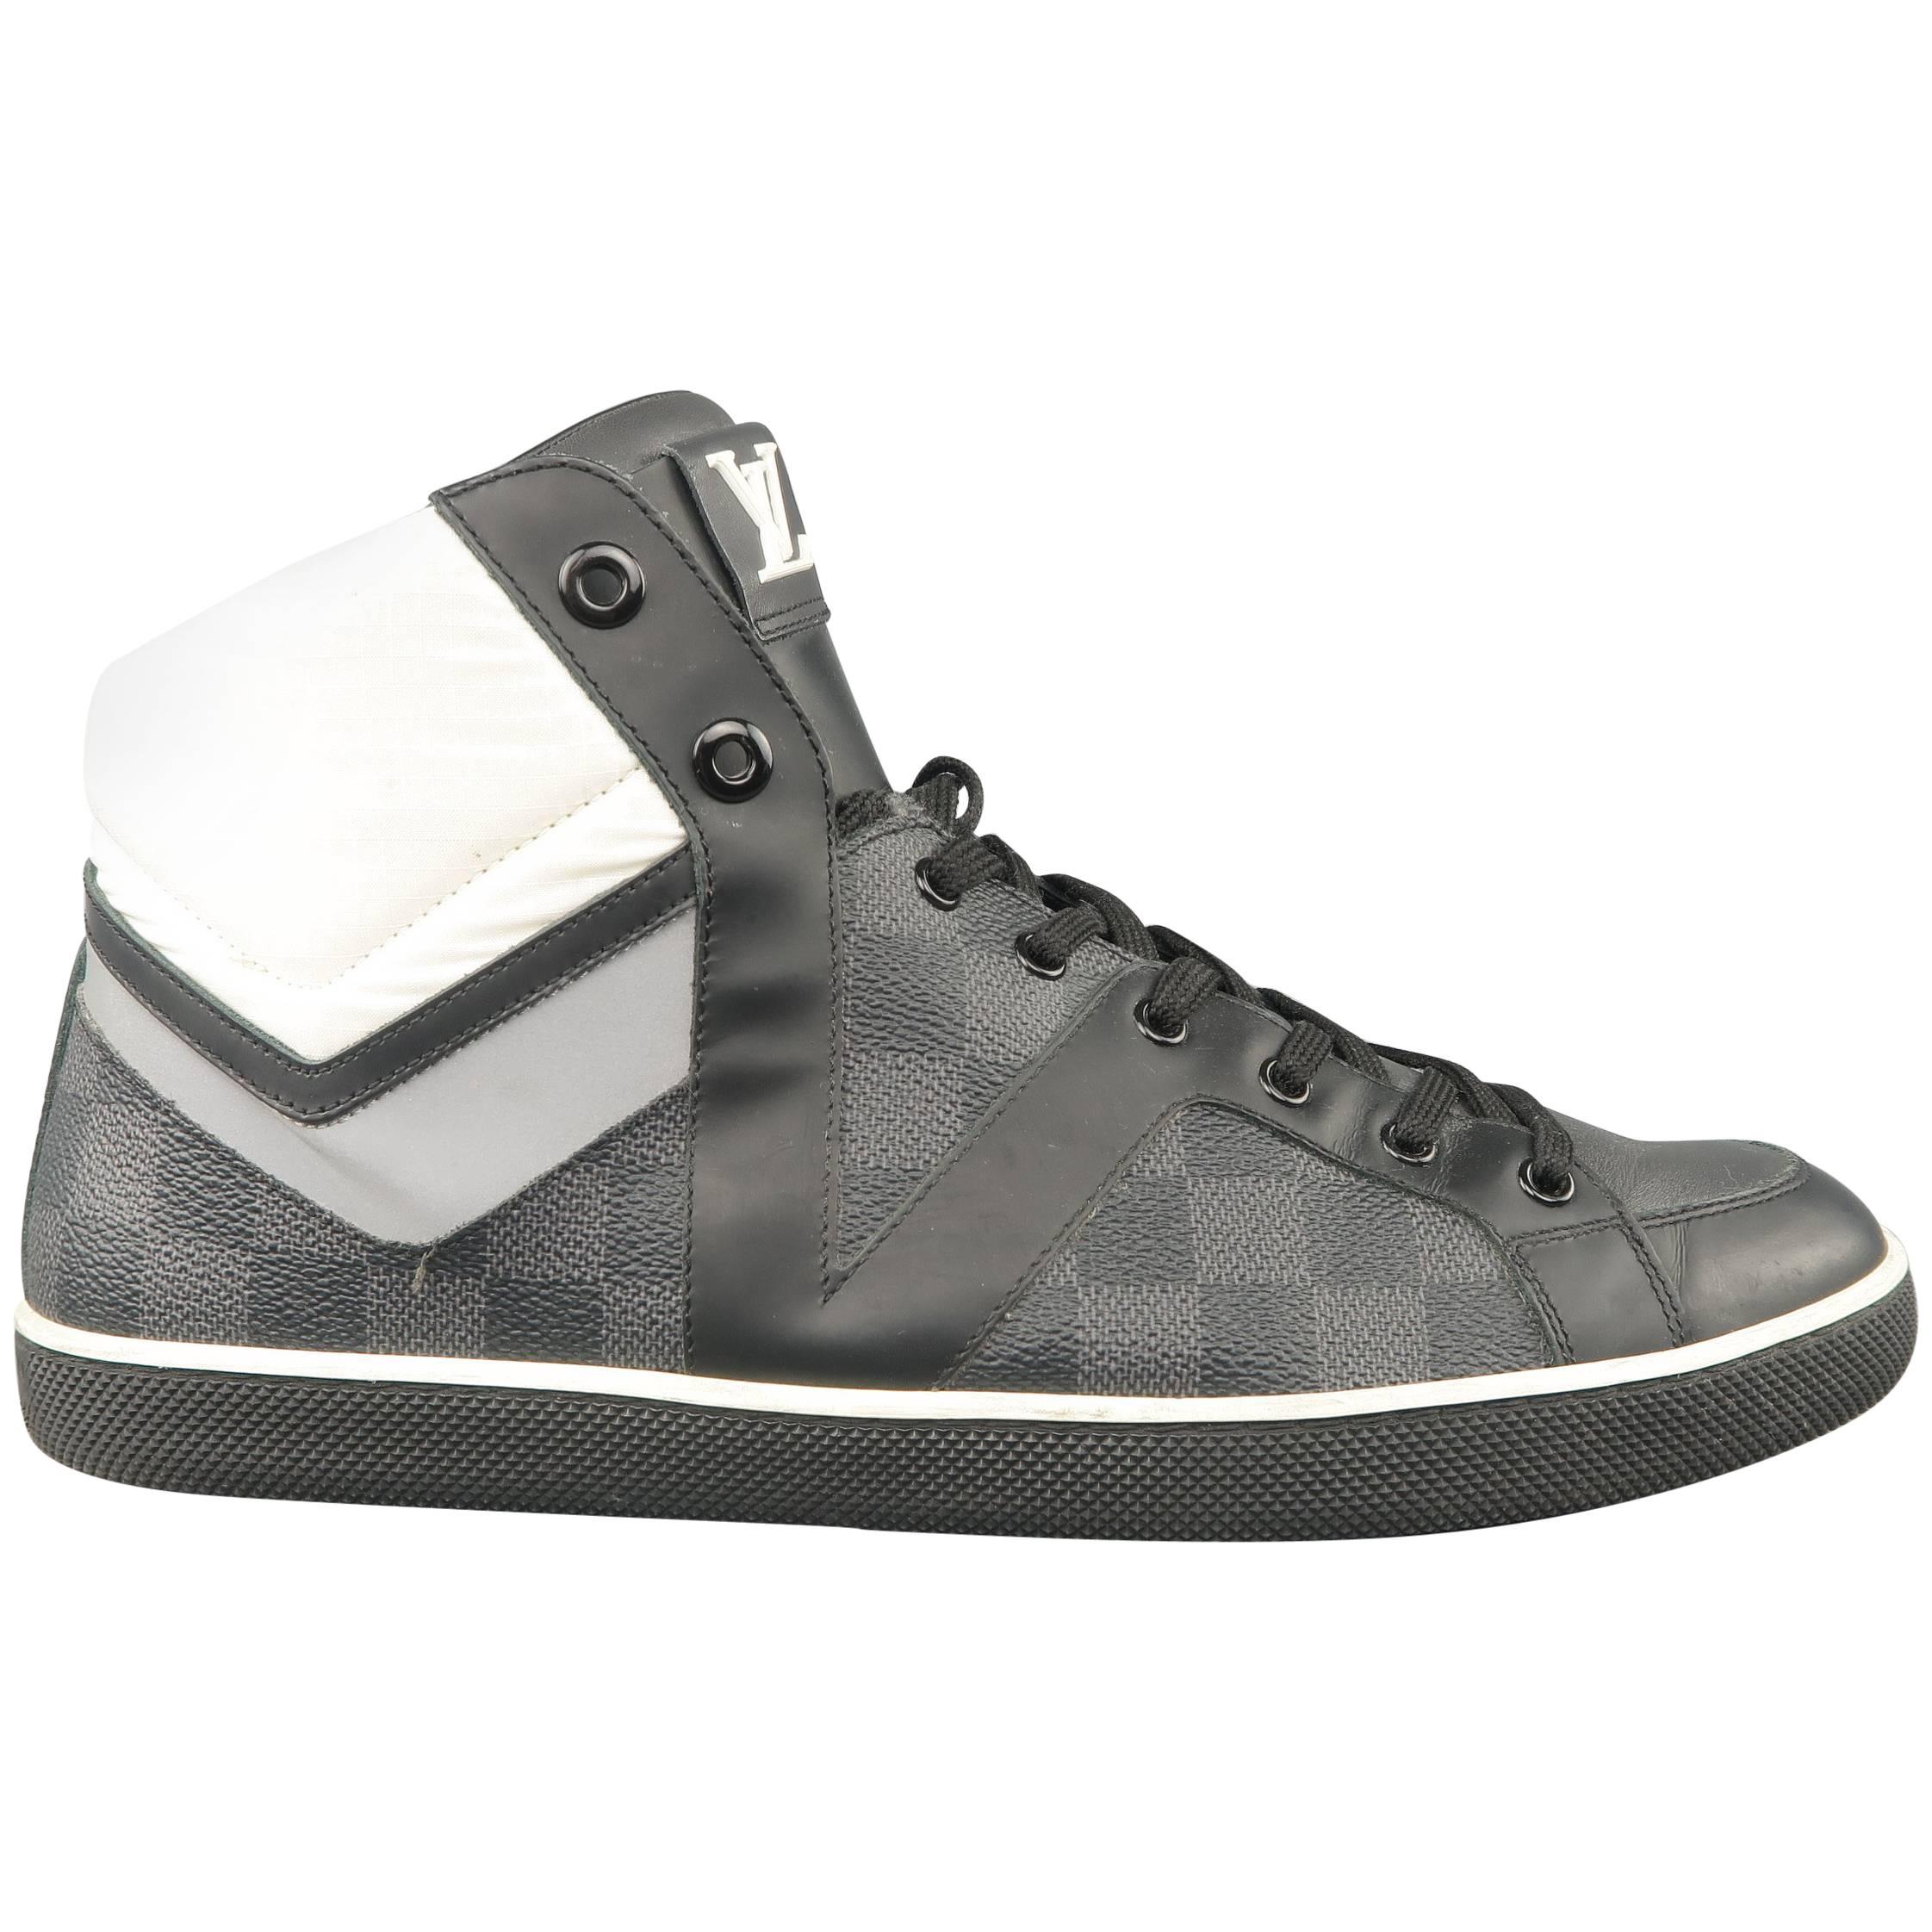 Men's LOUIS VUITTON Sneaker 10 Black & Gray Damier Leather Reflective High Top